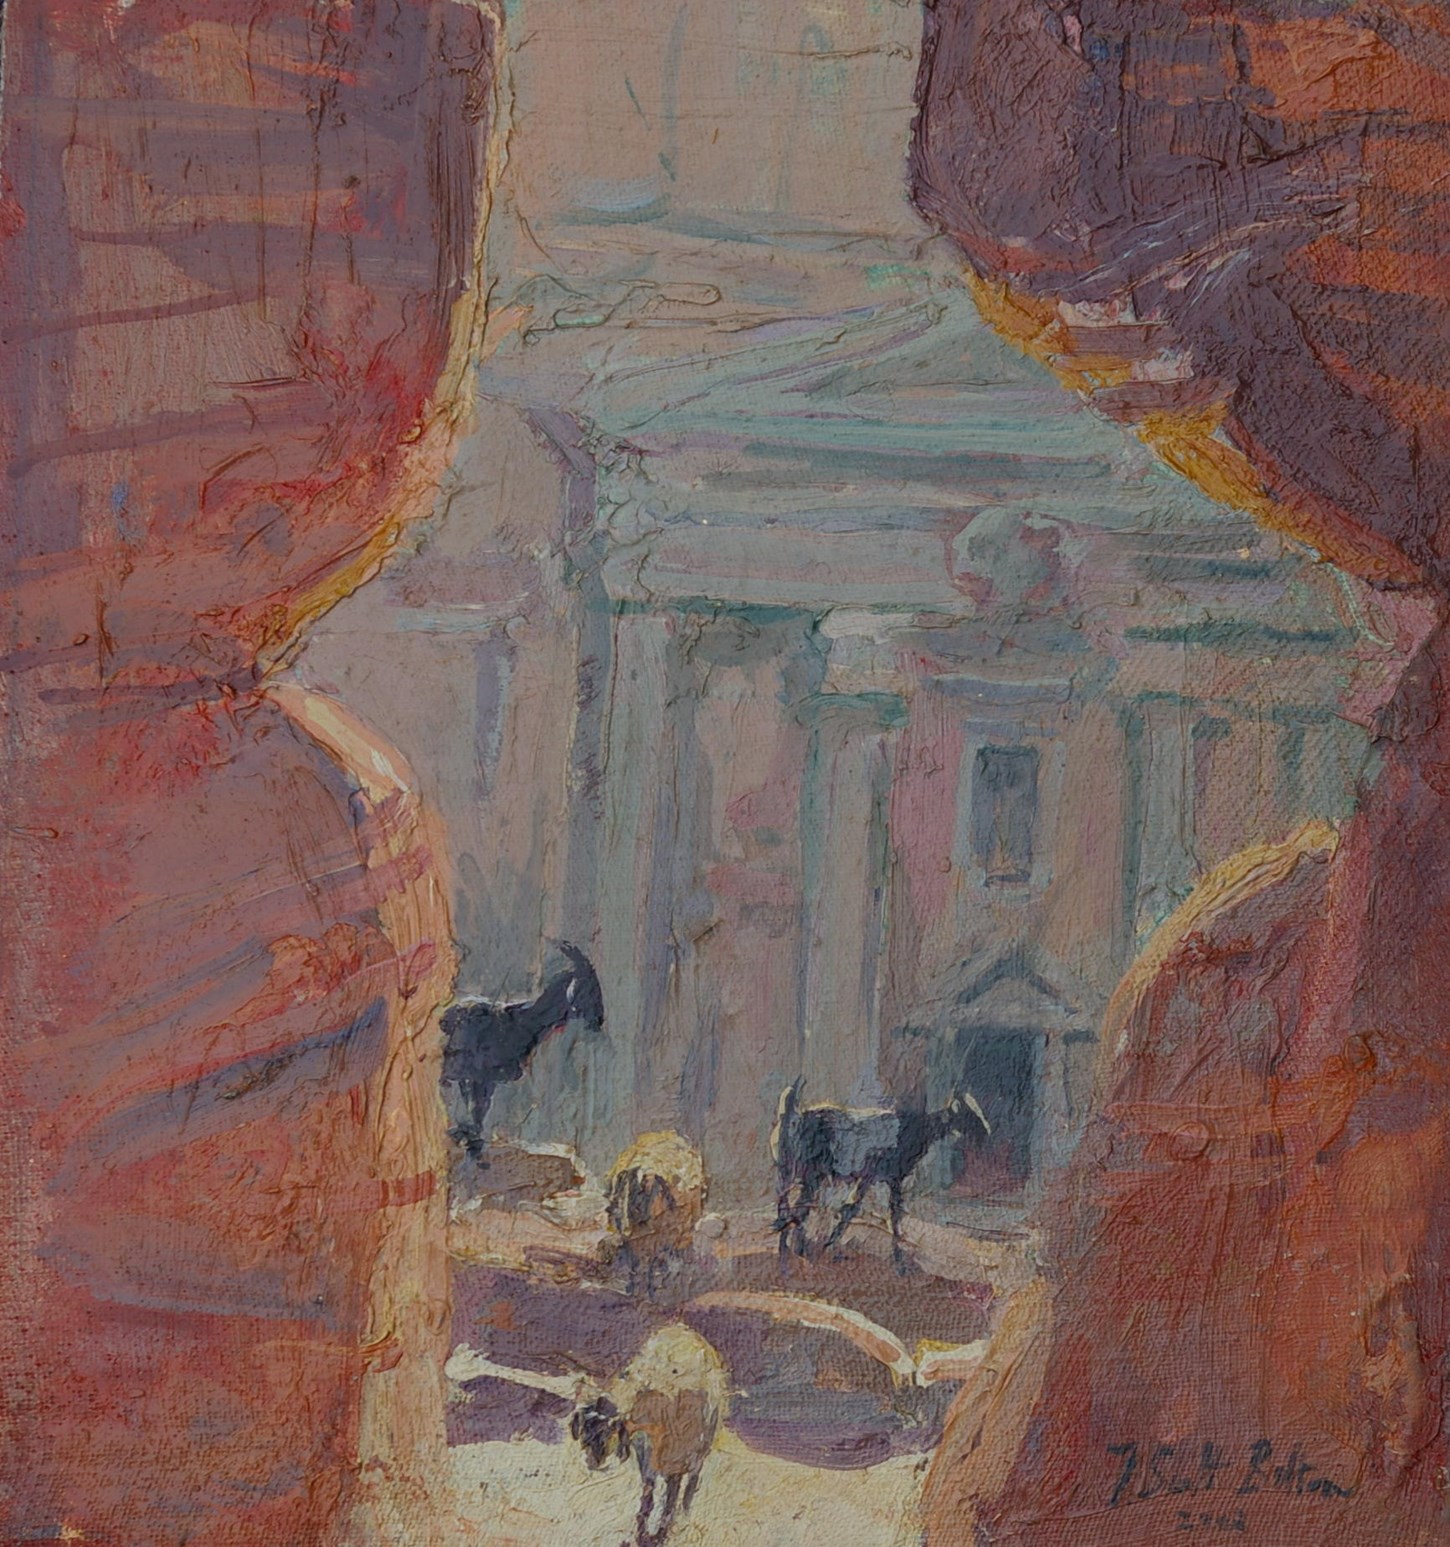 Roman Soldiers' Tomb, Petra